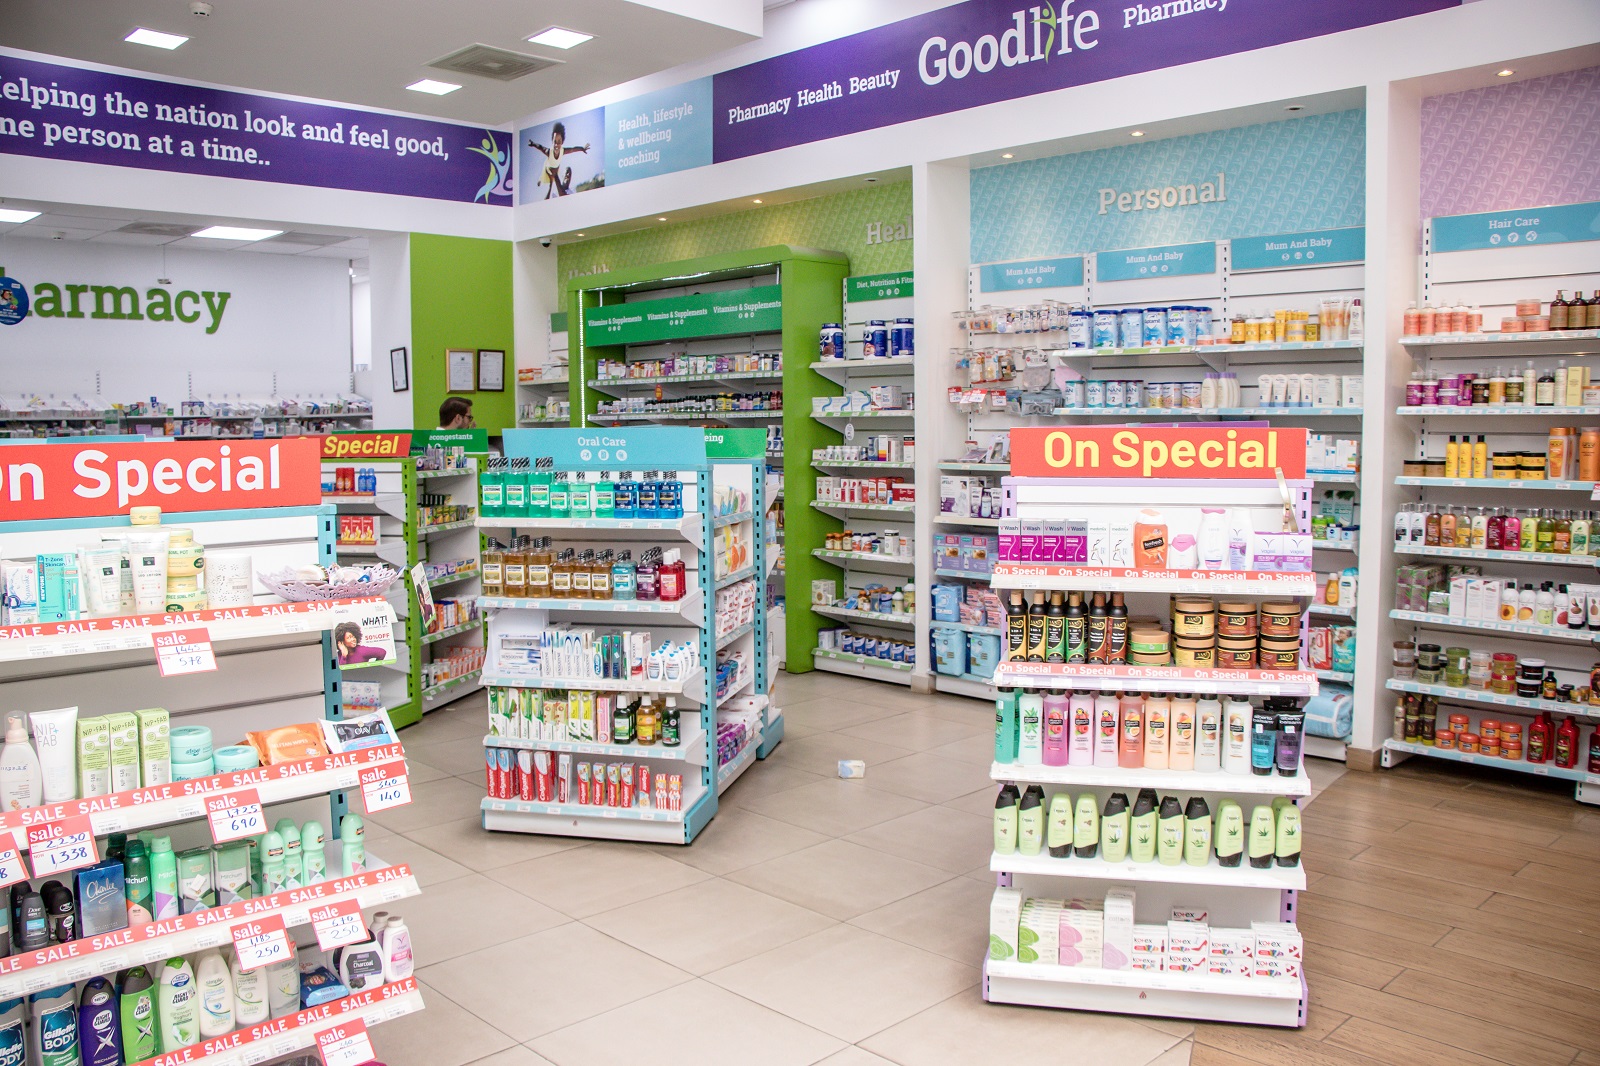 Goodlife Pharmacy - Business Focus